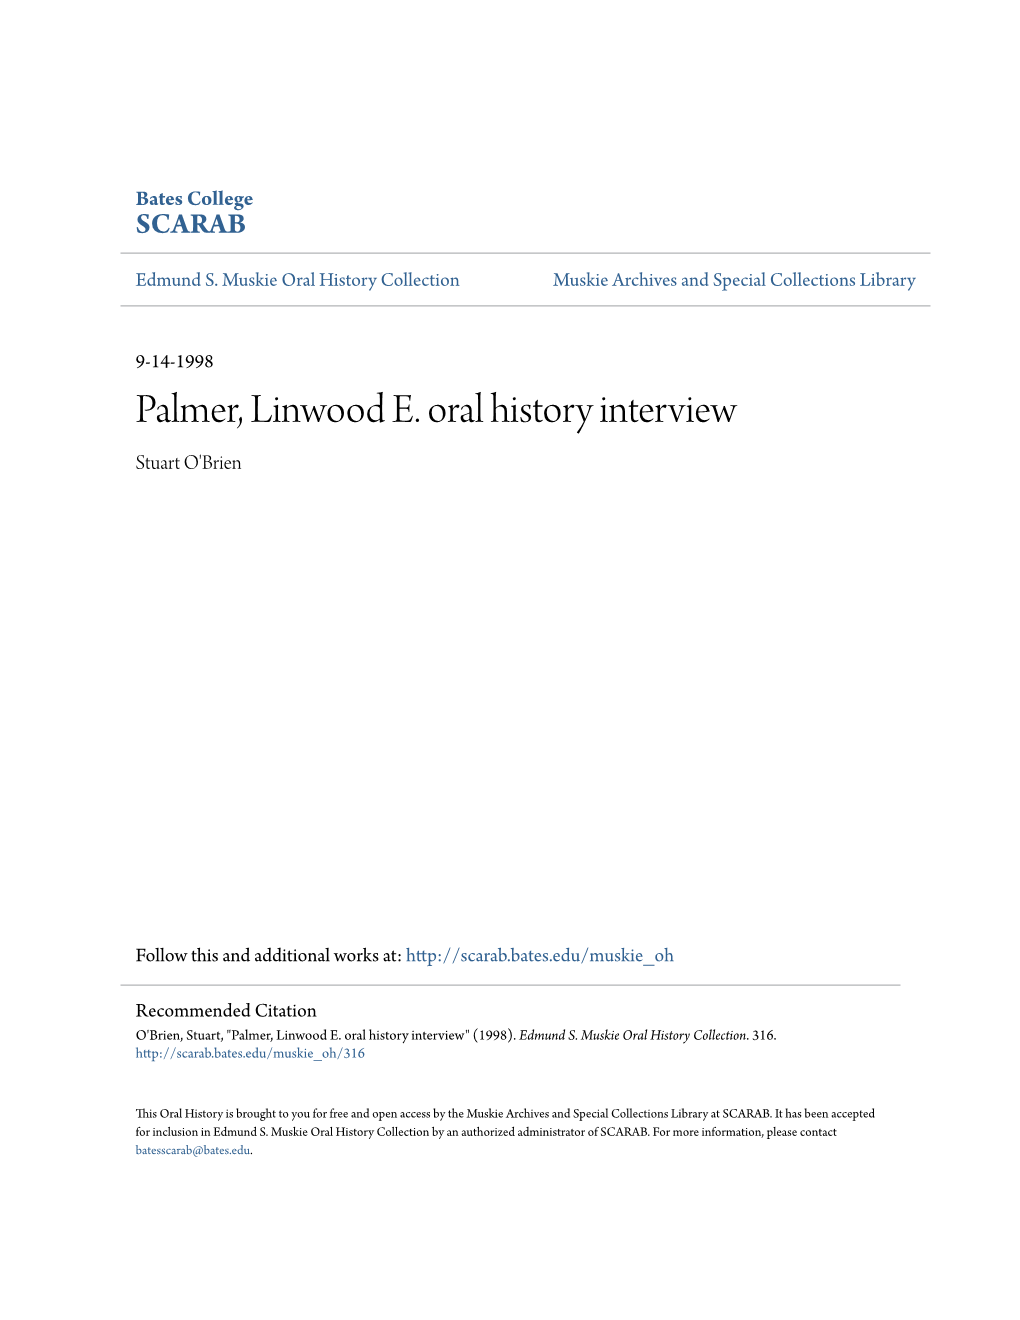 Palmer, Linwood E. Oral History Interview Stuart O'brien